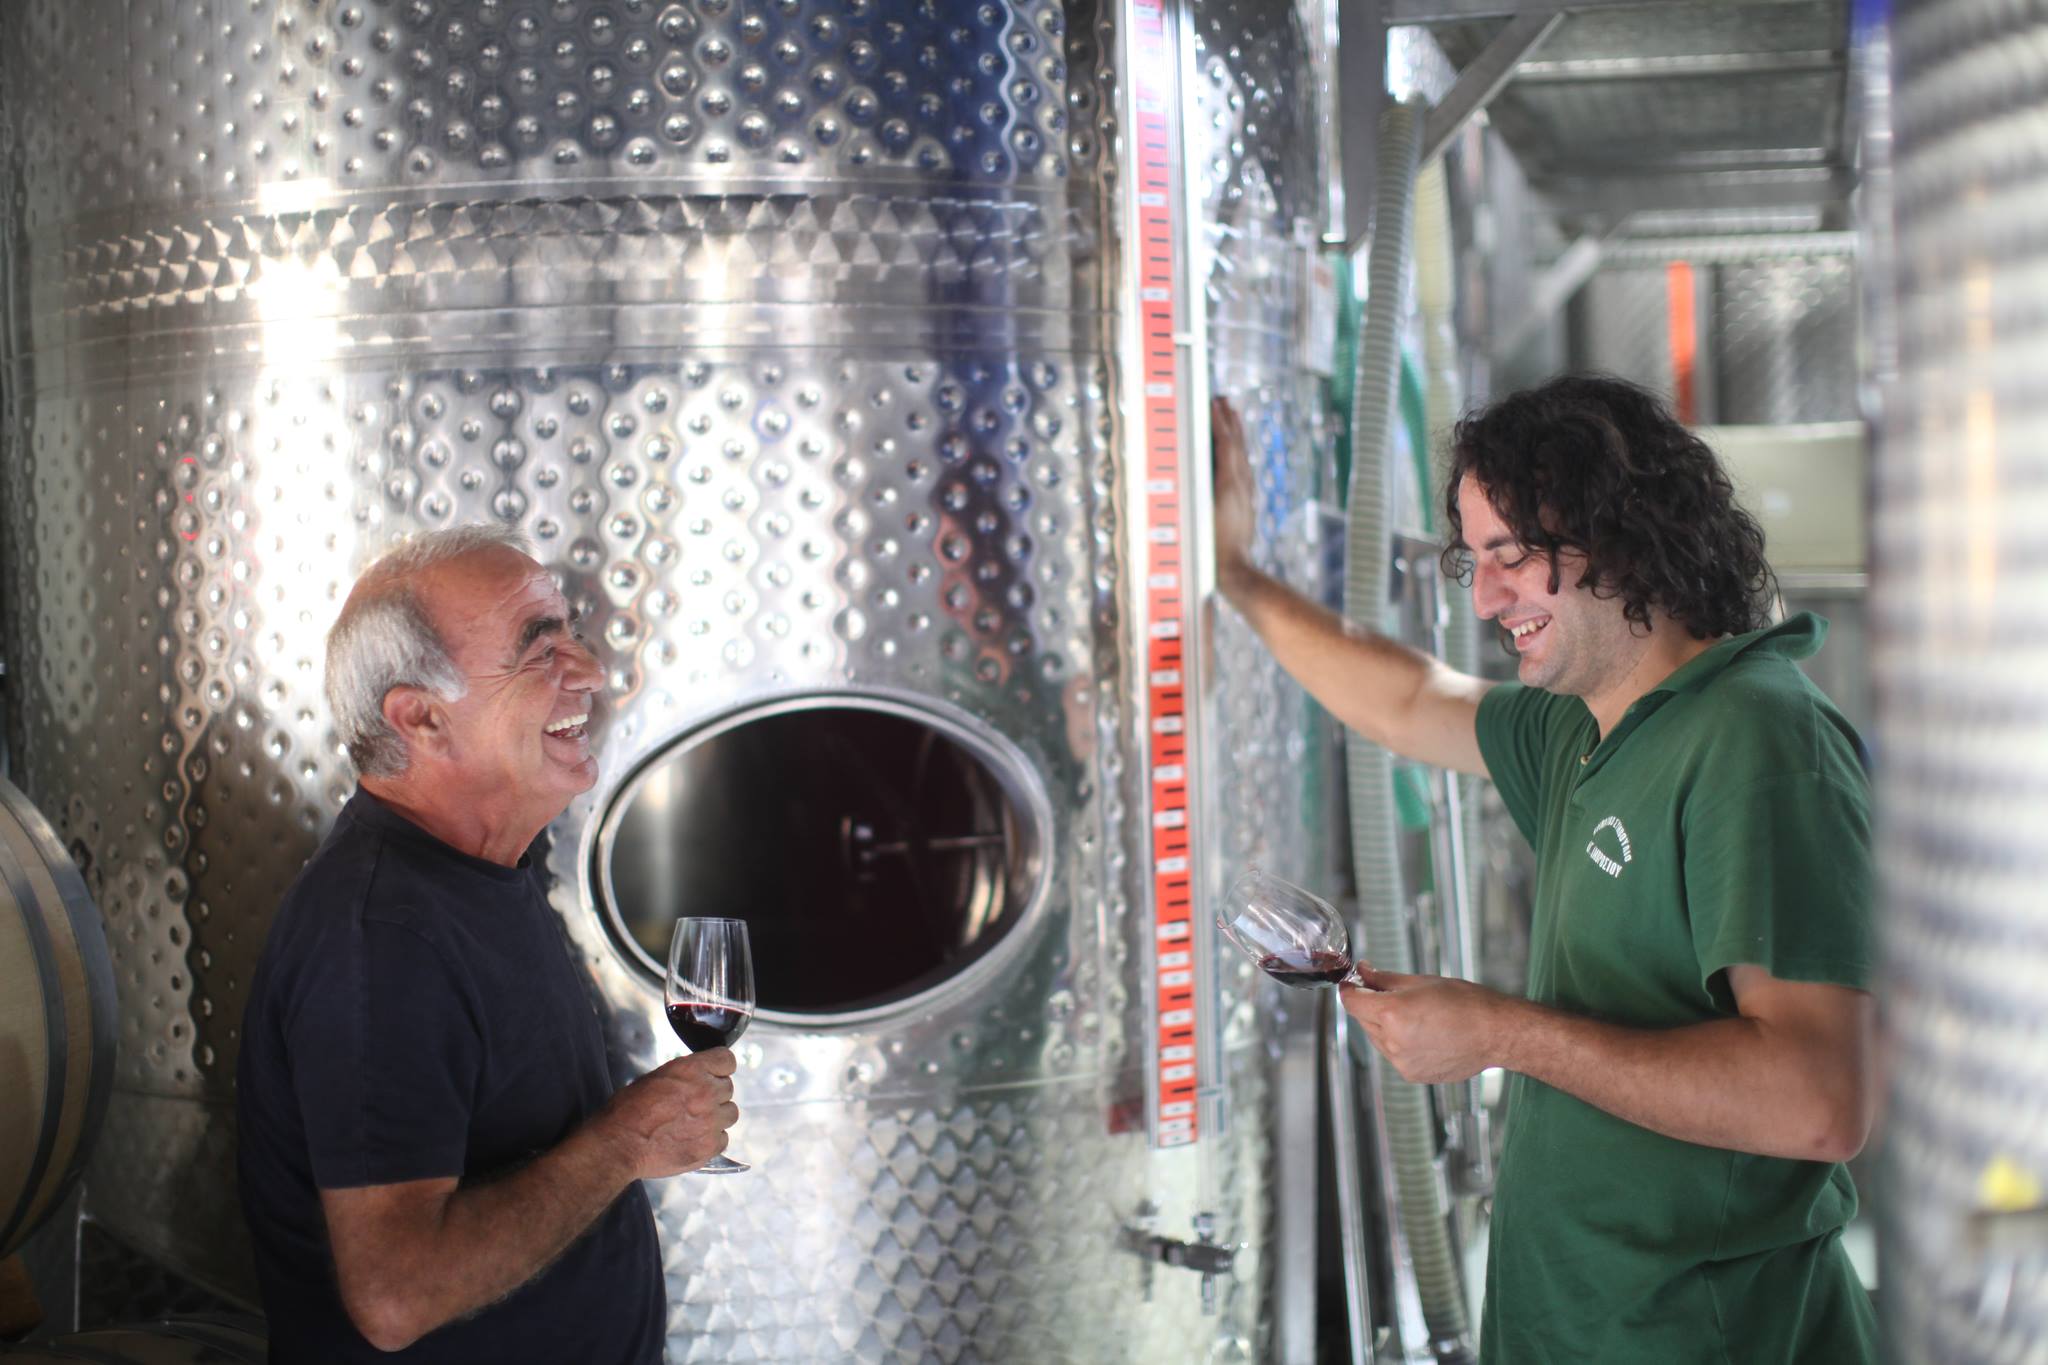 Cypriot wine tasting: two steps forward one step back